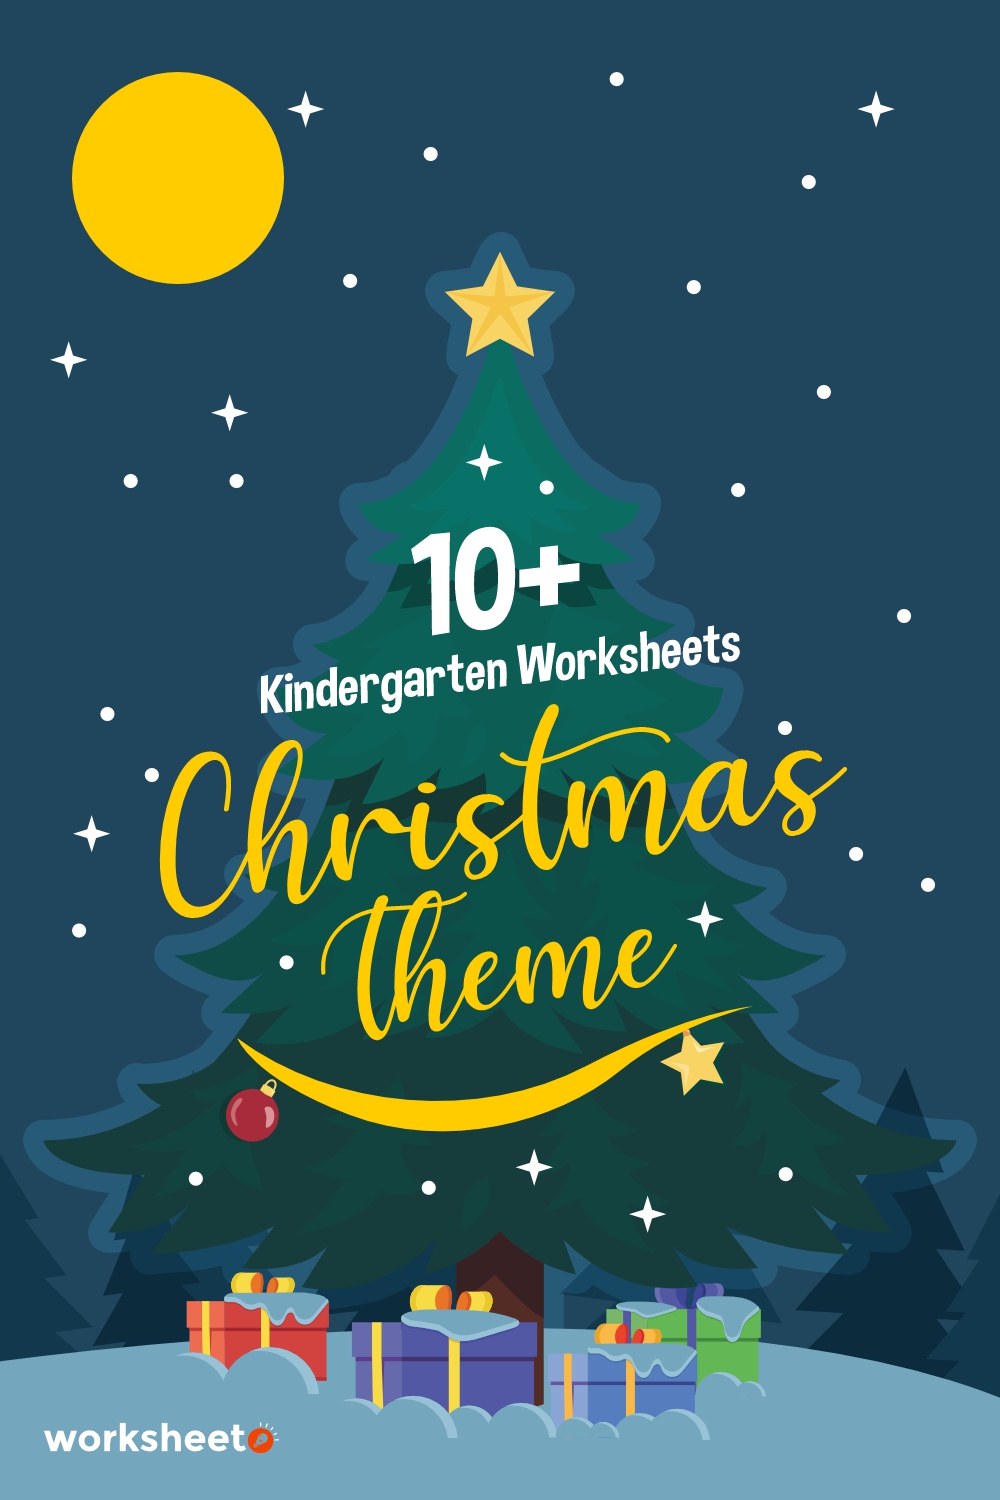 13 Images of Kindergarten Worksheets Christmas Theme